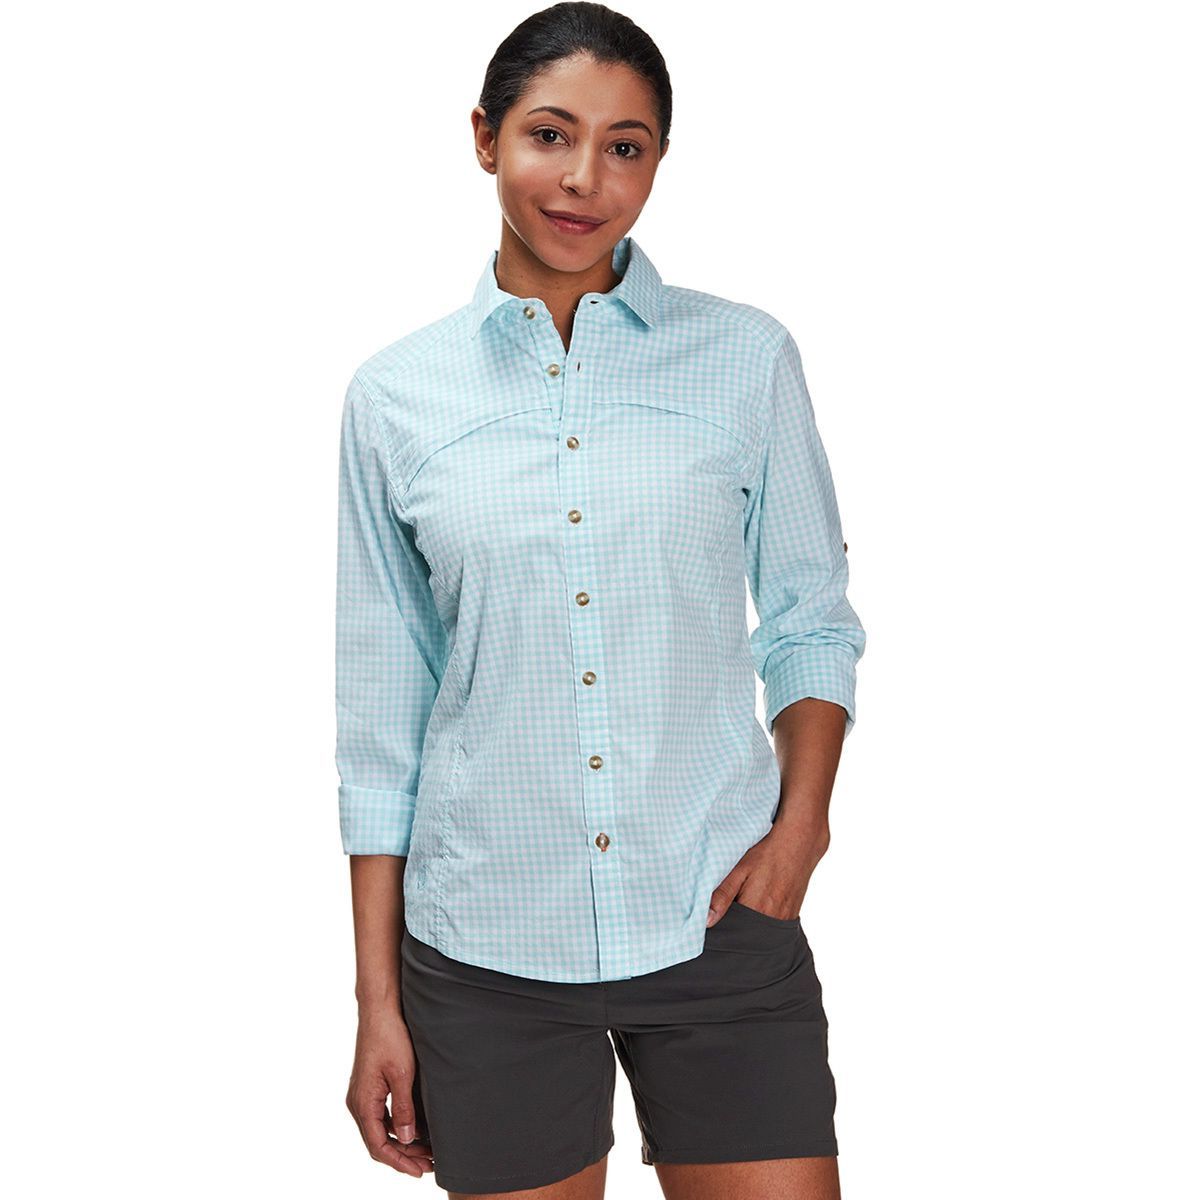 Orvis River Guide Tech Gingham Long-Sleeve Shirt - Women's